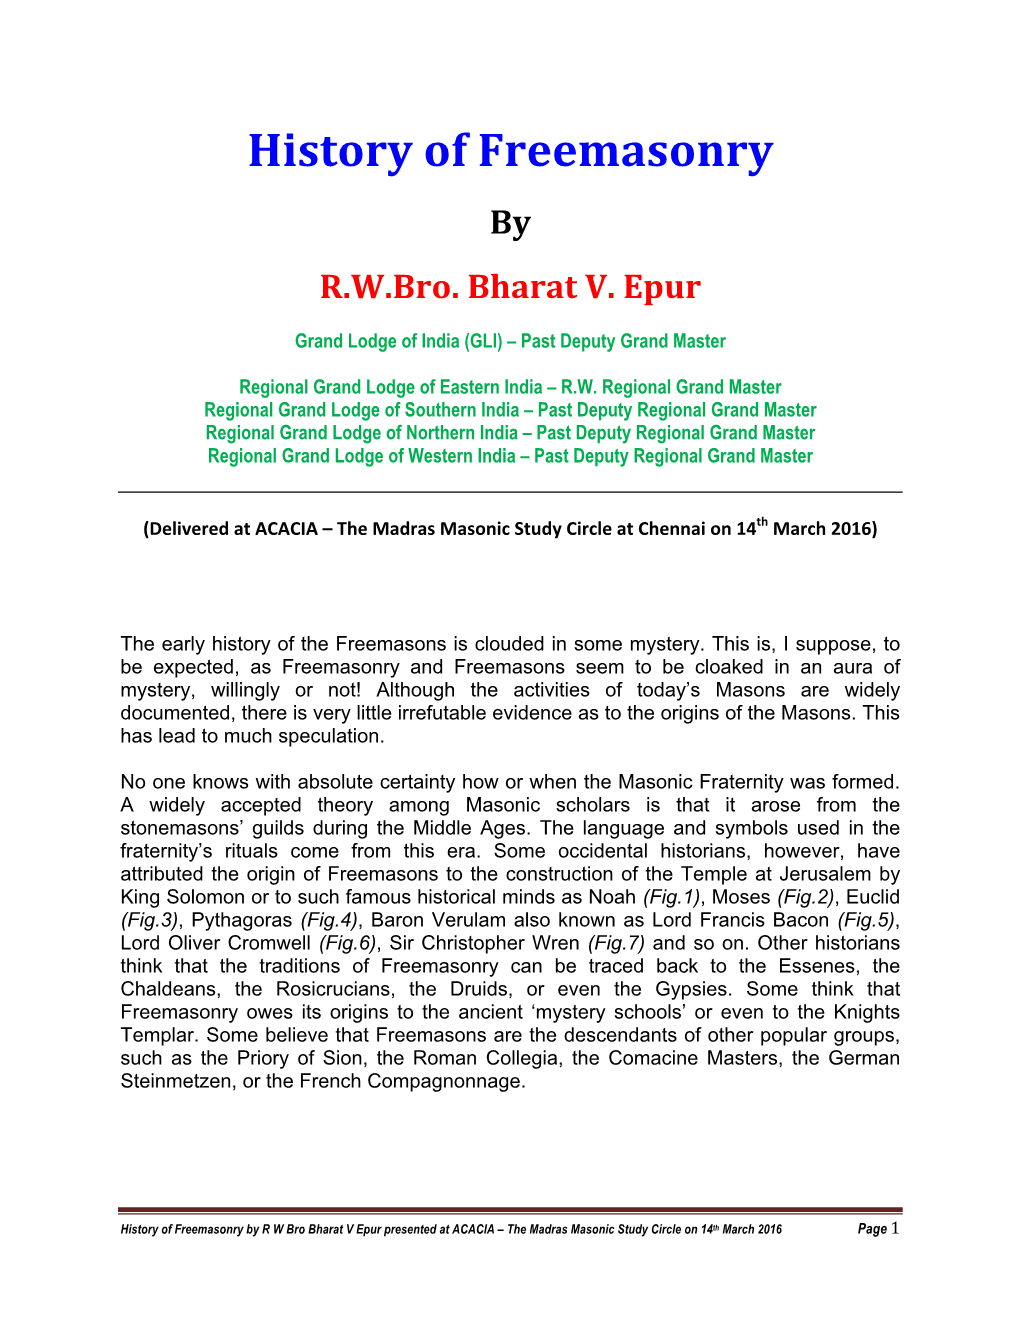 History of Freemasonry by R.W.Bro